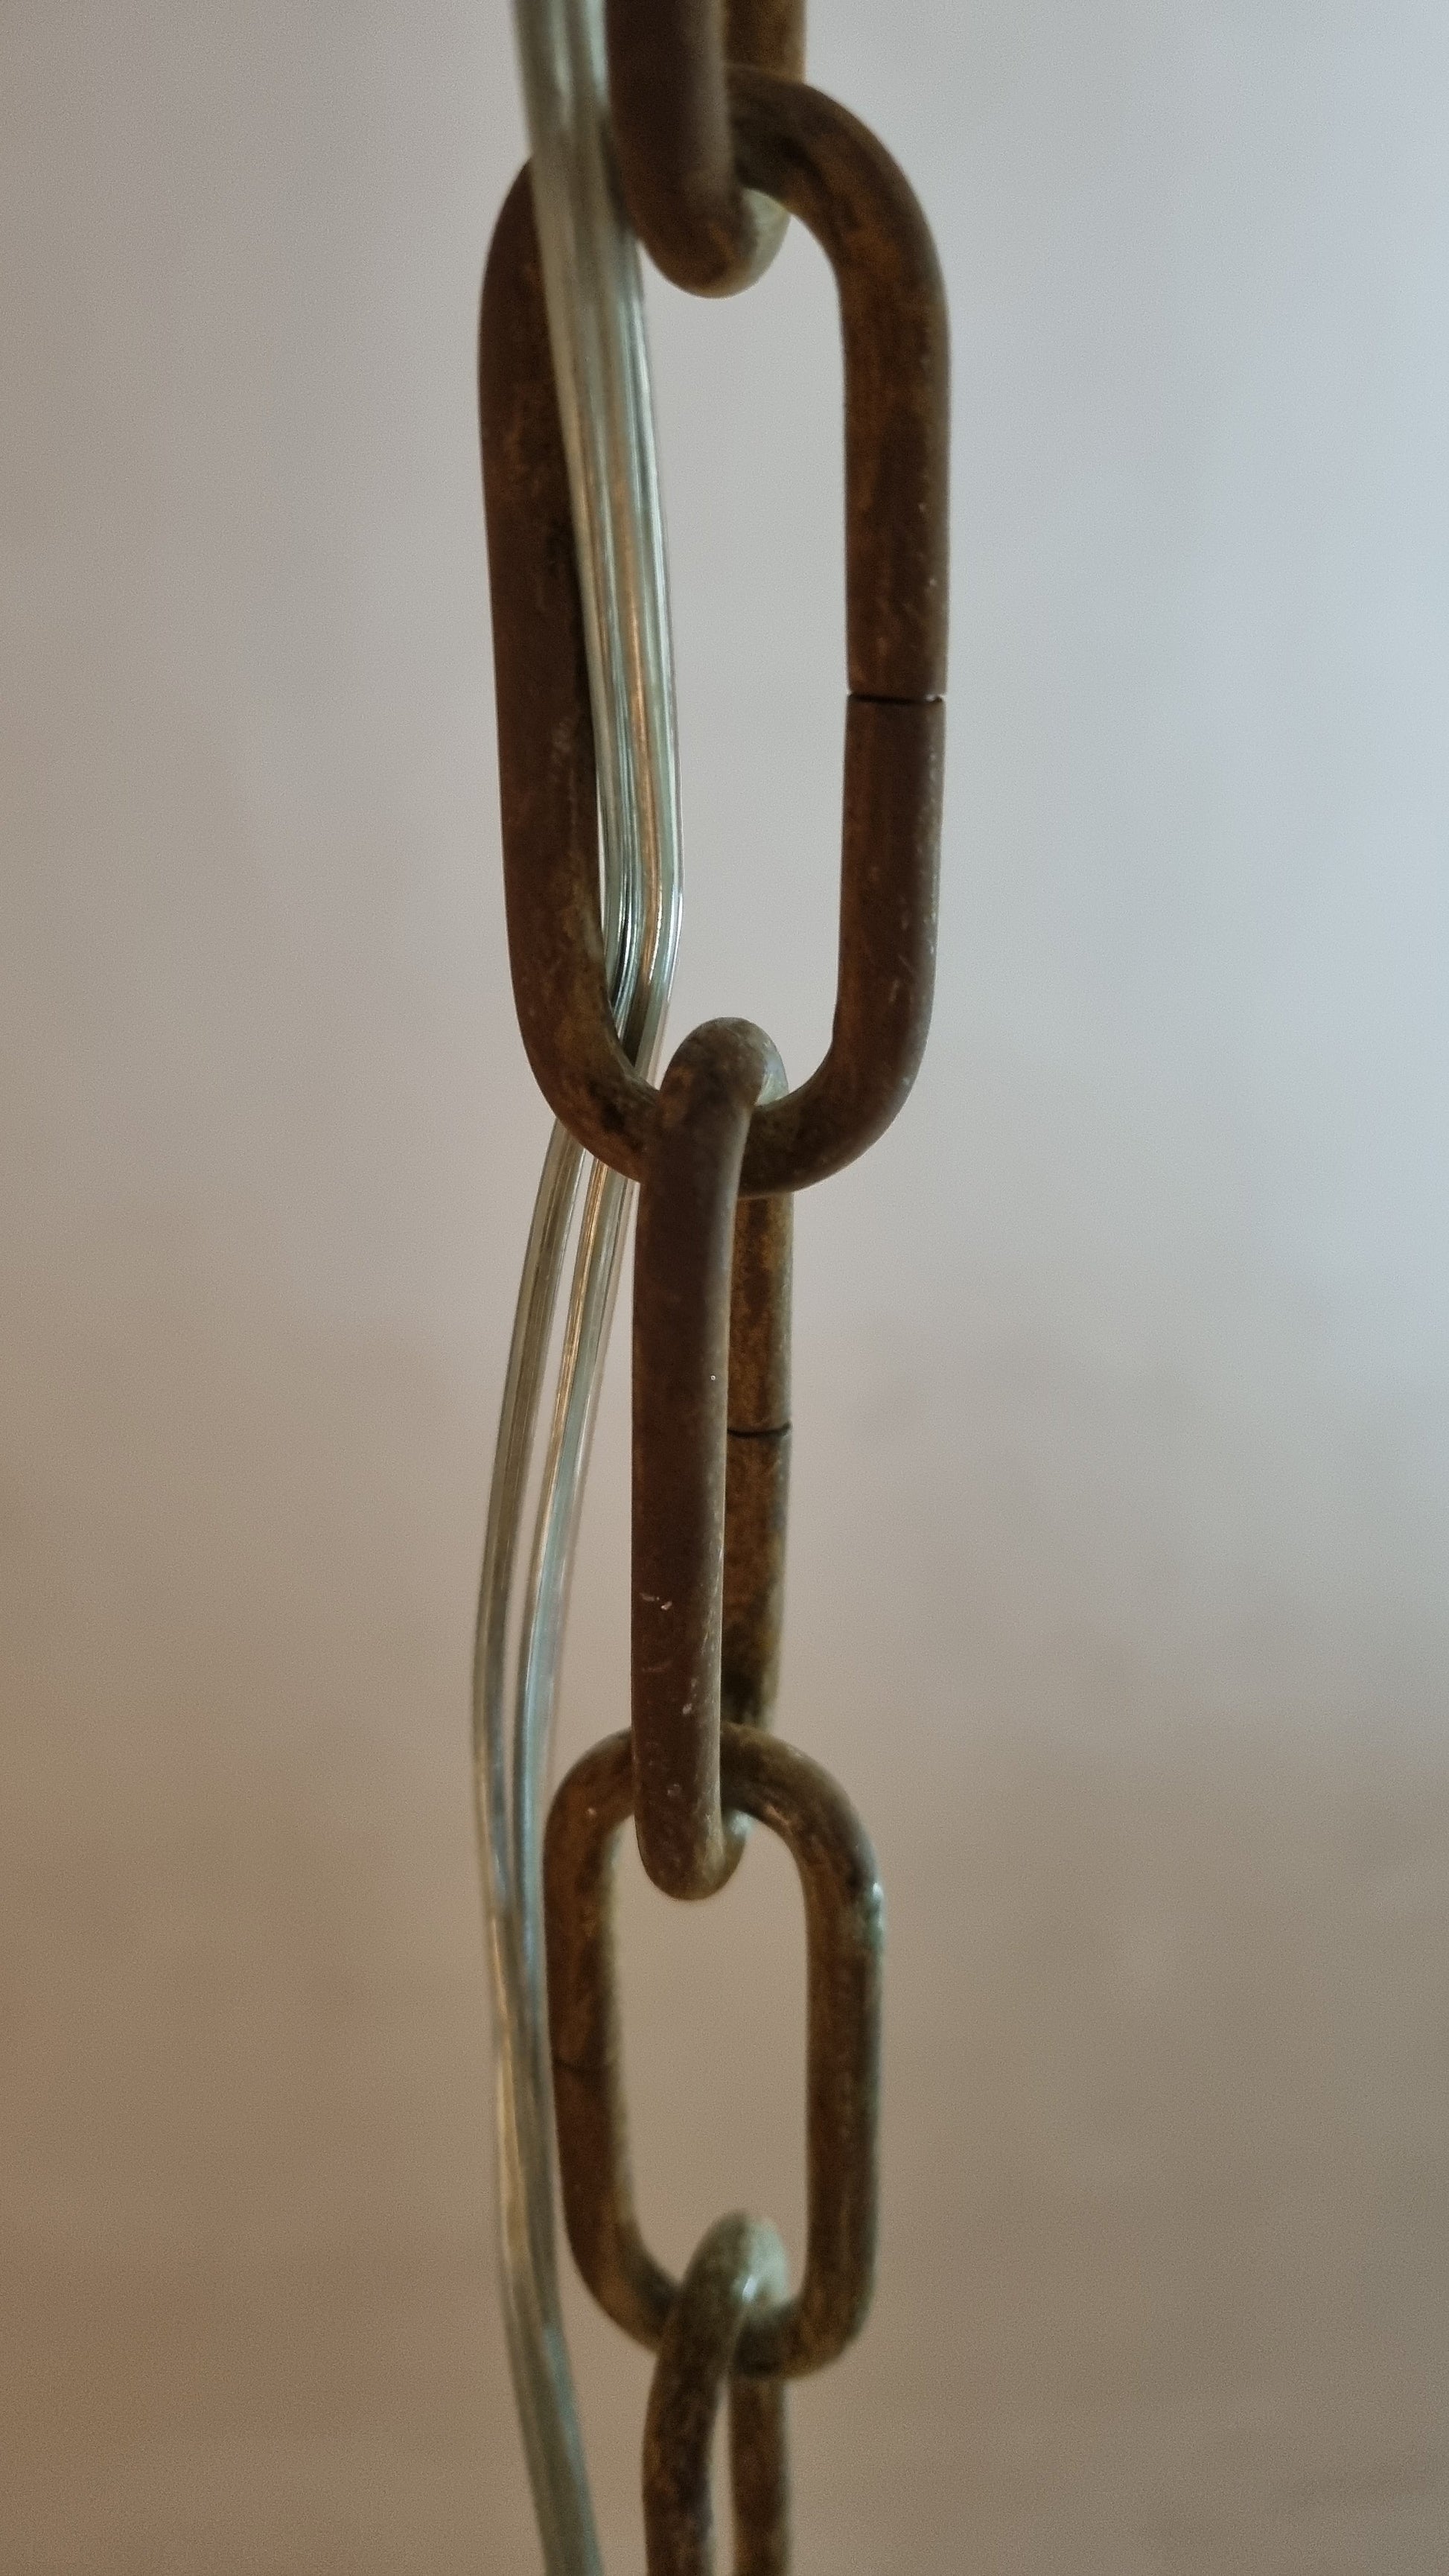 Poliedri Pendant Lamp by Carlo Scarpa for Venini Pendant Lights Vintage